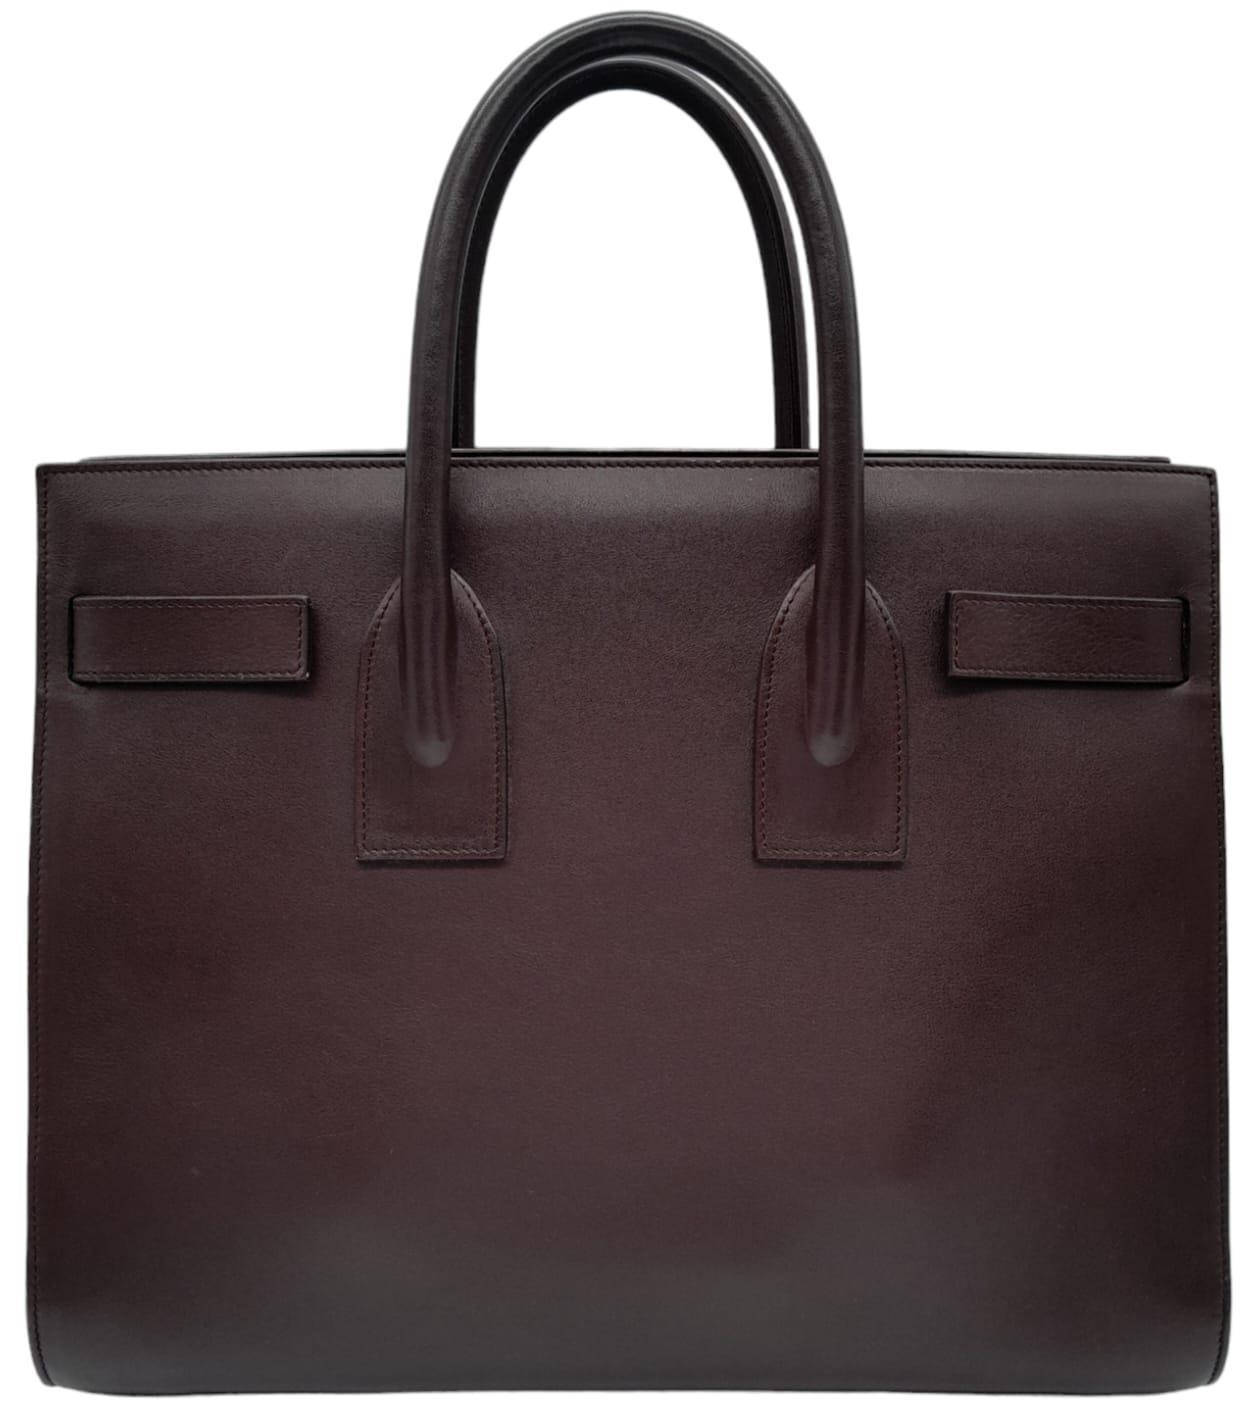 A Saint Laurent Sac De Jour Burgundy Handbag. Leather Exterior, Gold Tone Hardware, Double Handle in - Image 2 of 9